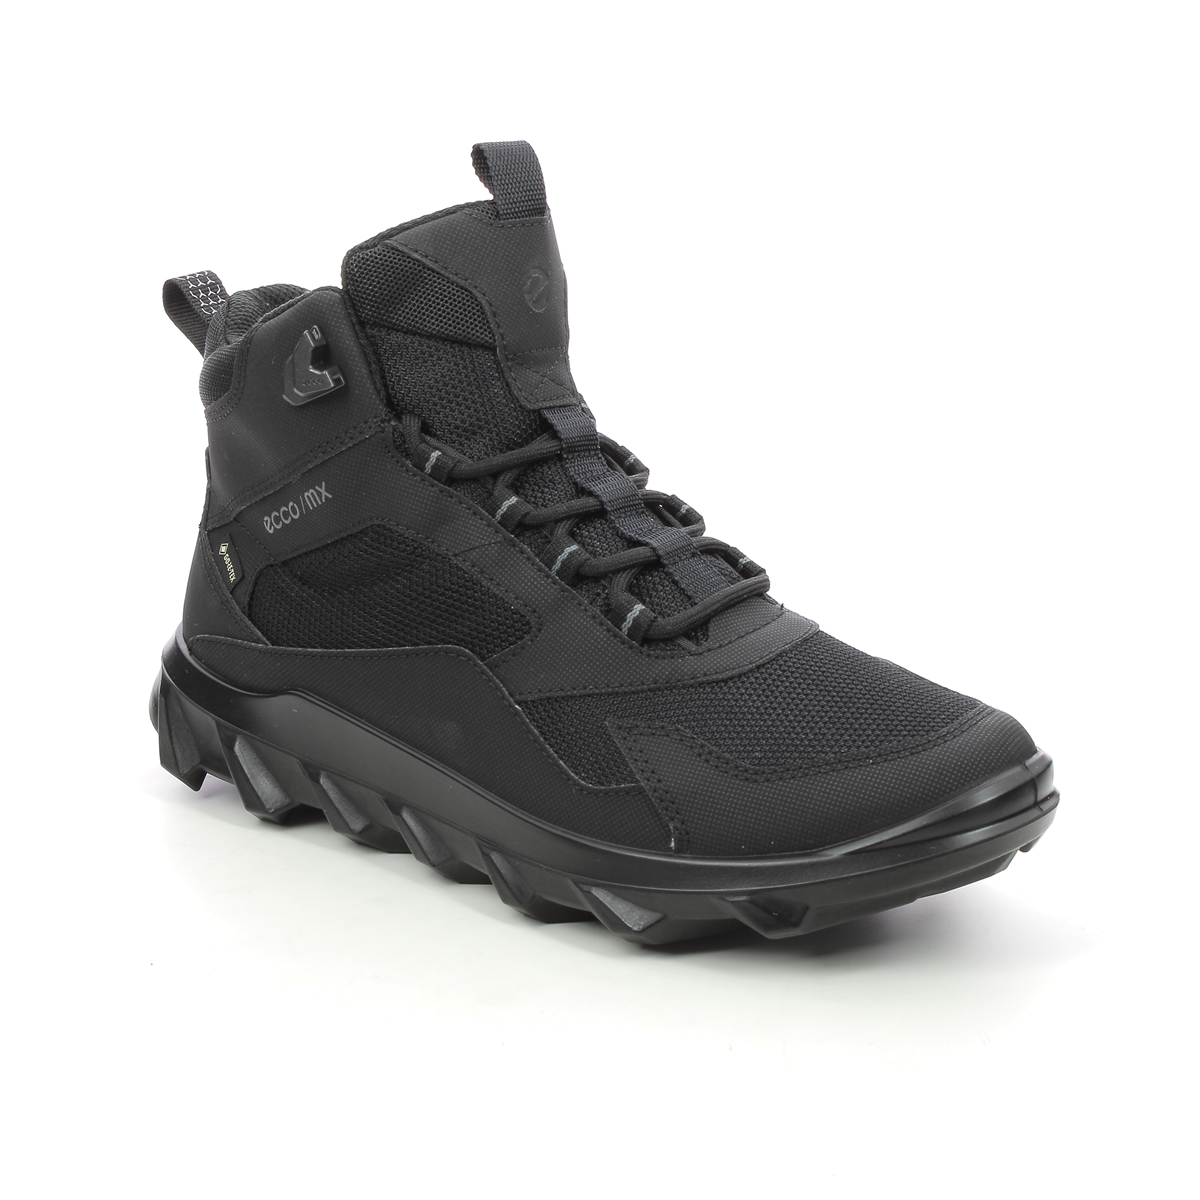 Ecco Mx Boot Gtx W Black Womens Walking Boots 820223-51052 In Size 42 In Plain Black